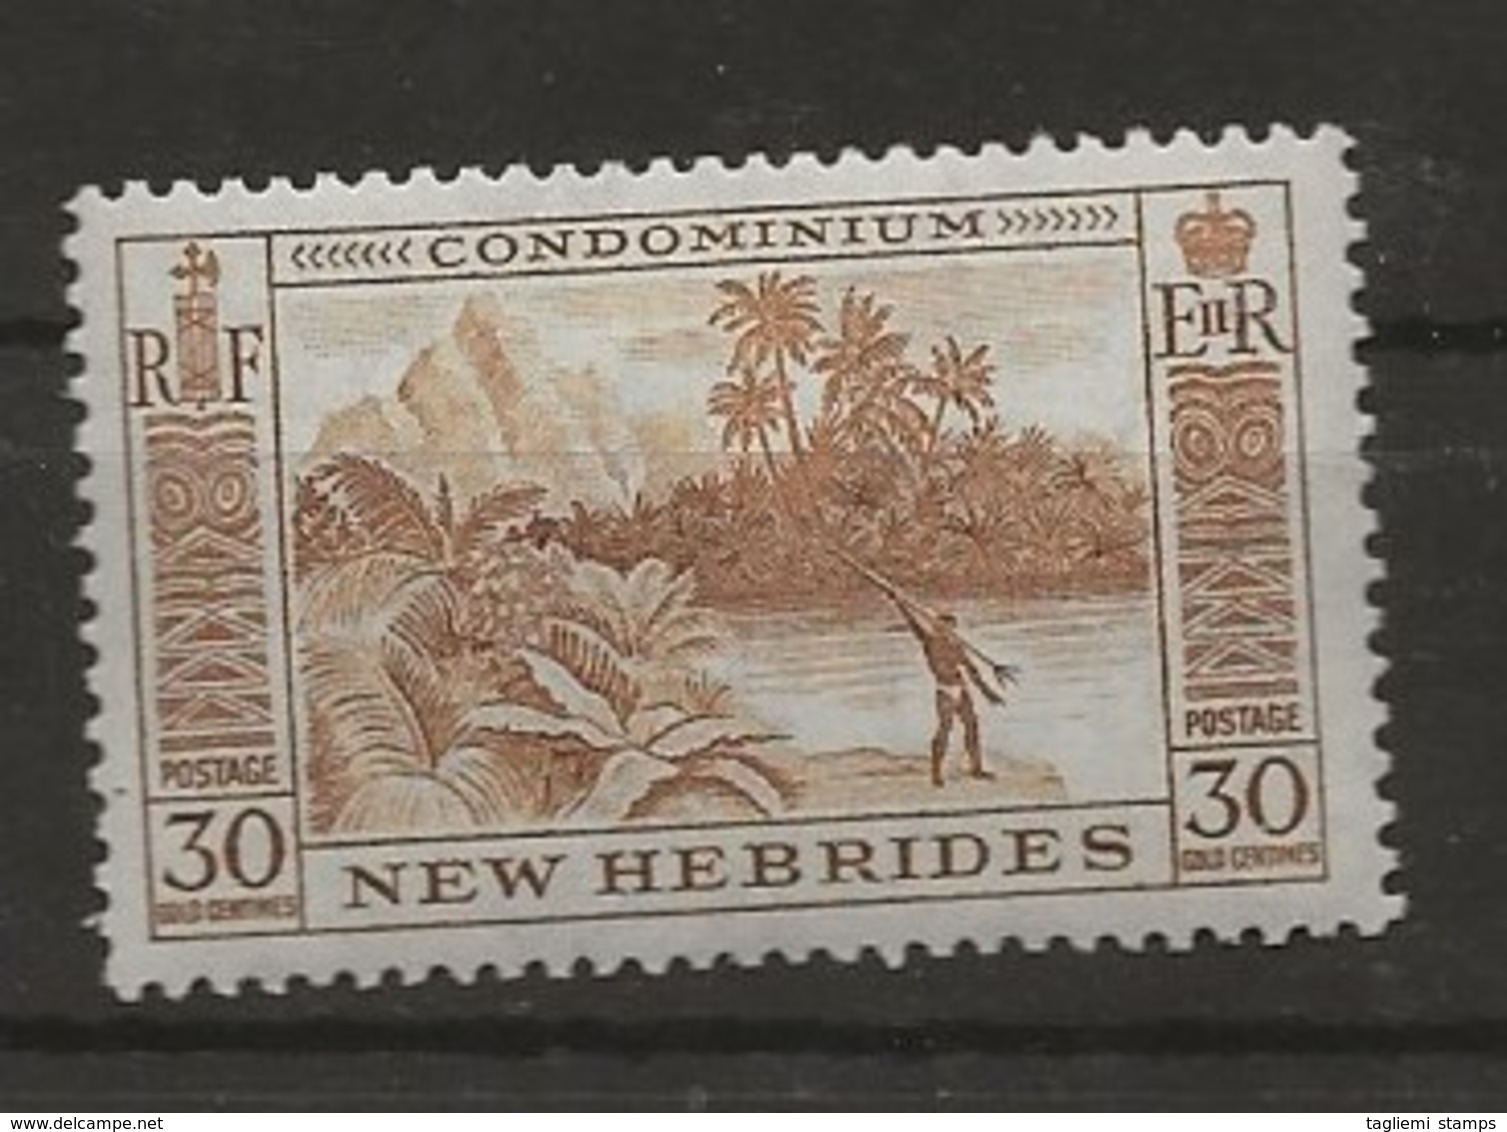 New Hebrides, 1957, SG  89, Mint Hinged - Ongebruikt